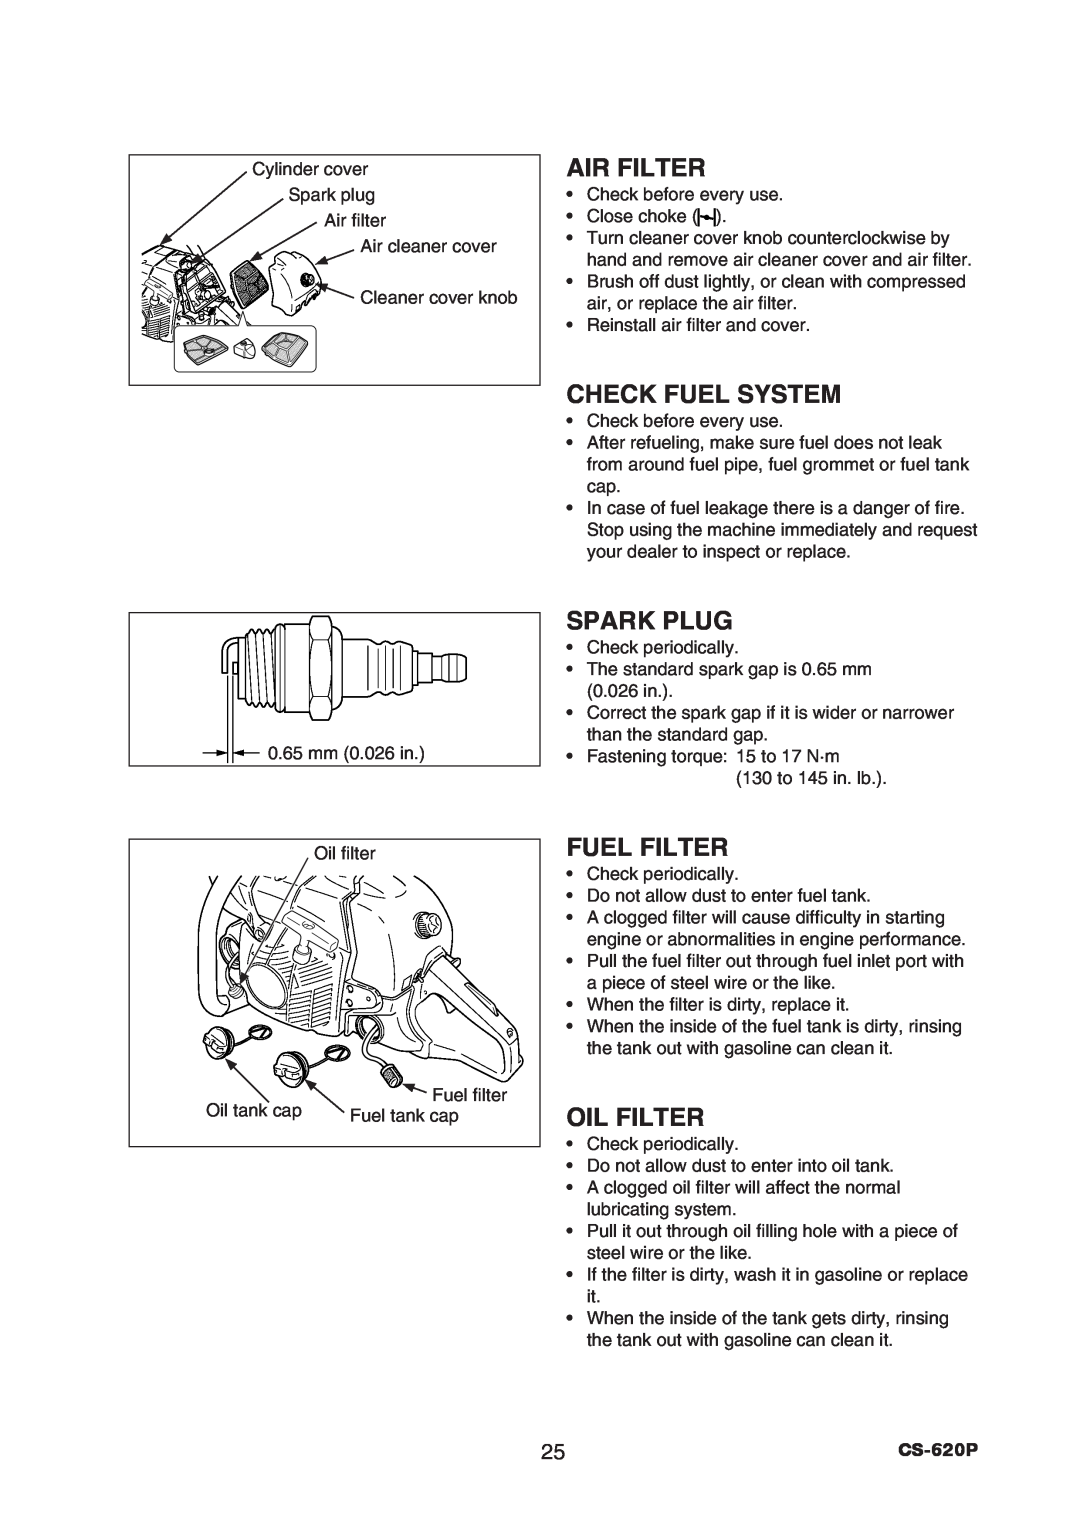 Echo CS-620P instruction manual Air Filter, Check Fuel System, Spark Plug, Fuel Filter, Oil Filter 